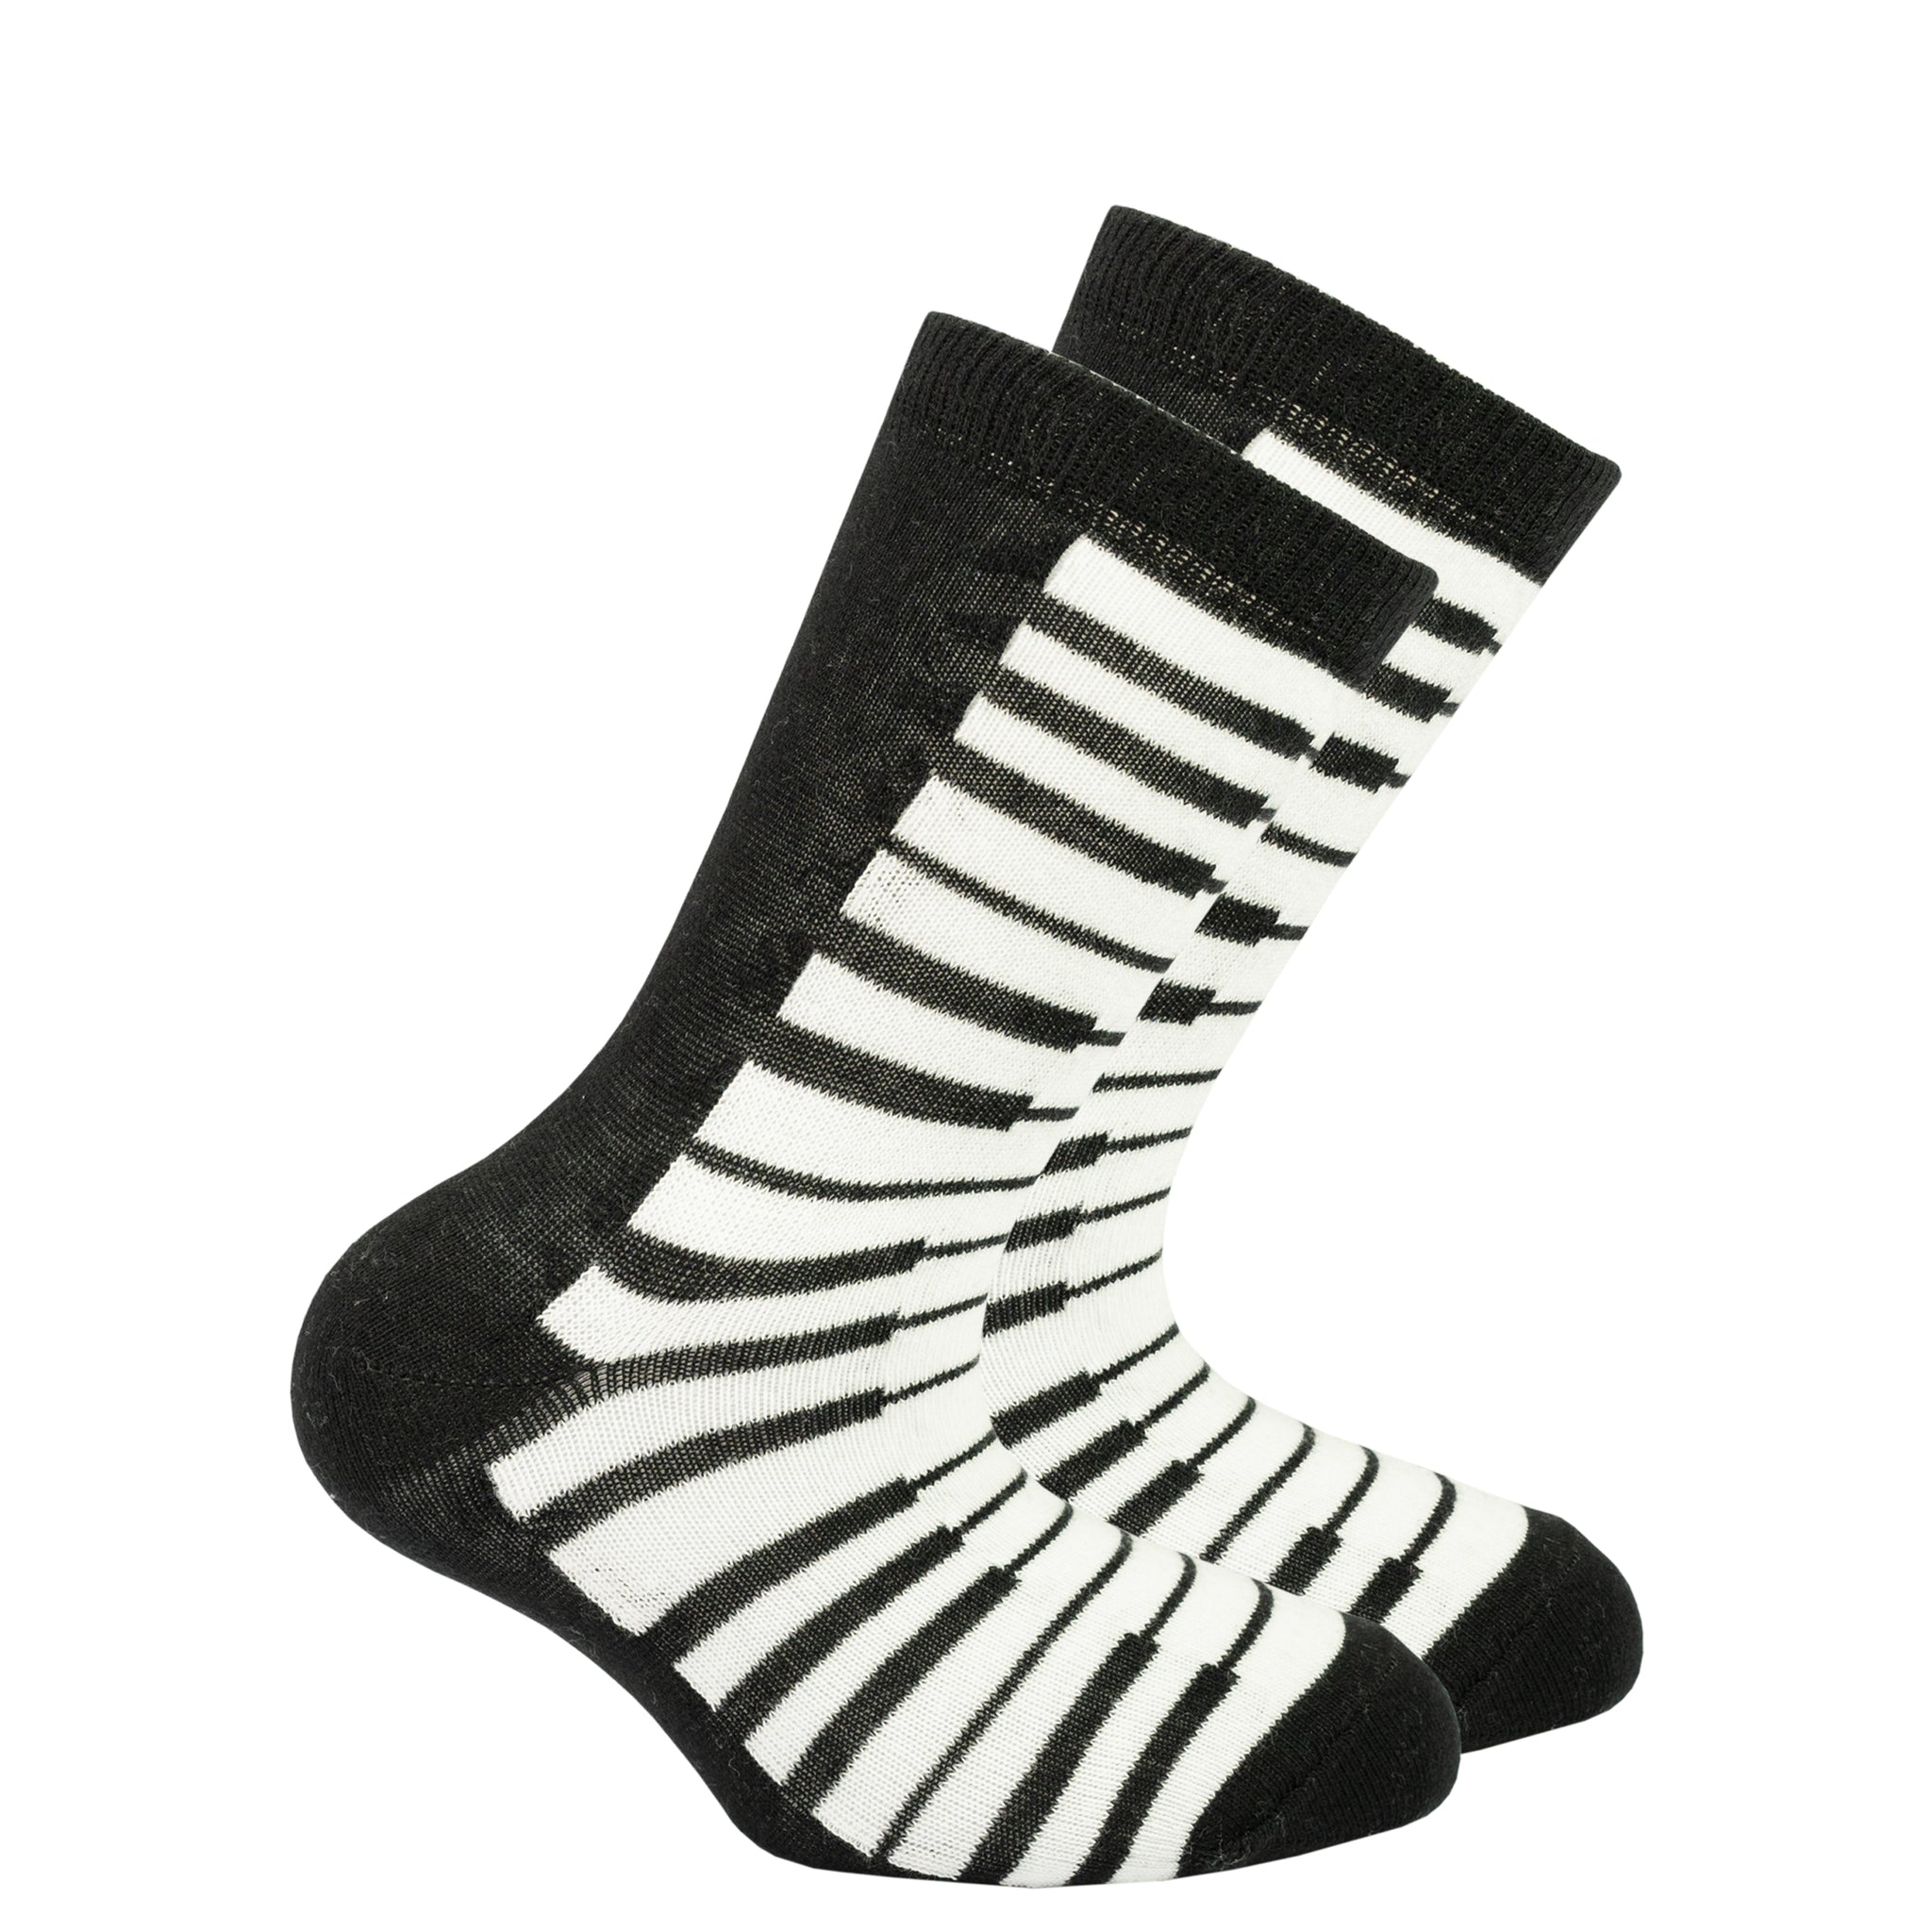 Kids Piano Socks black and white